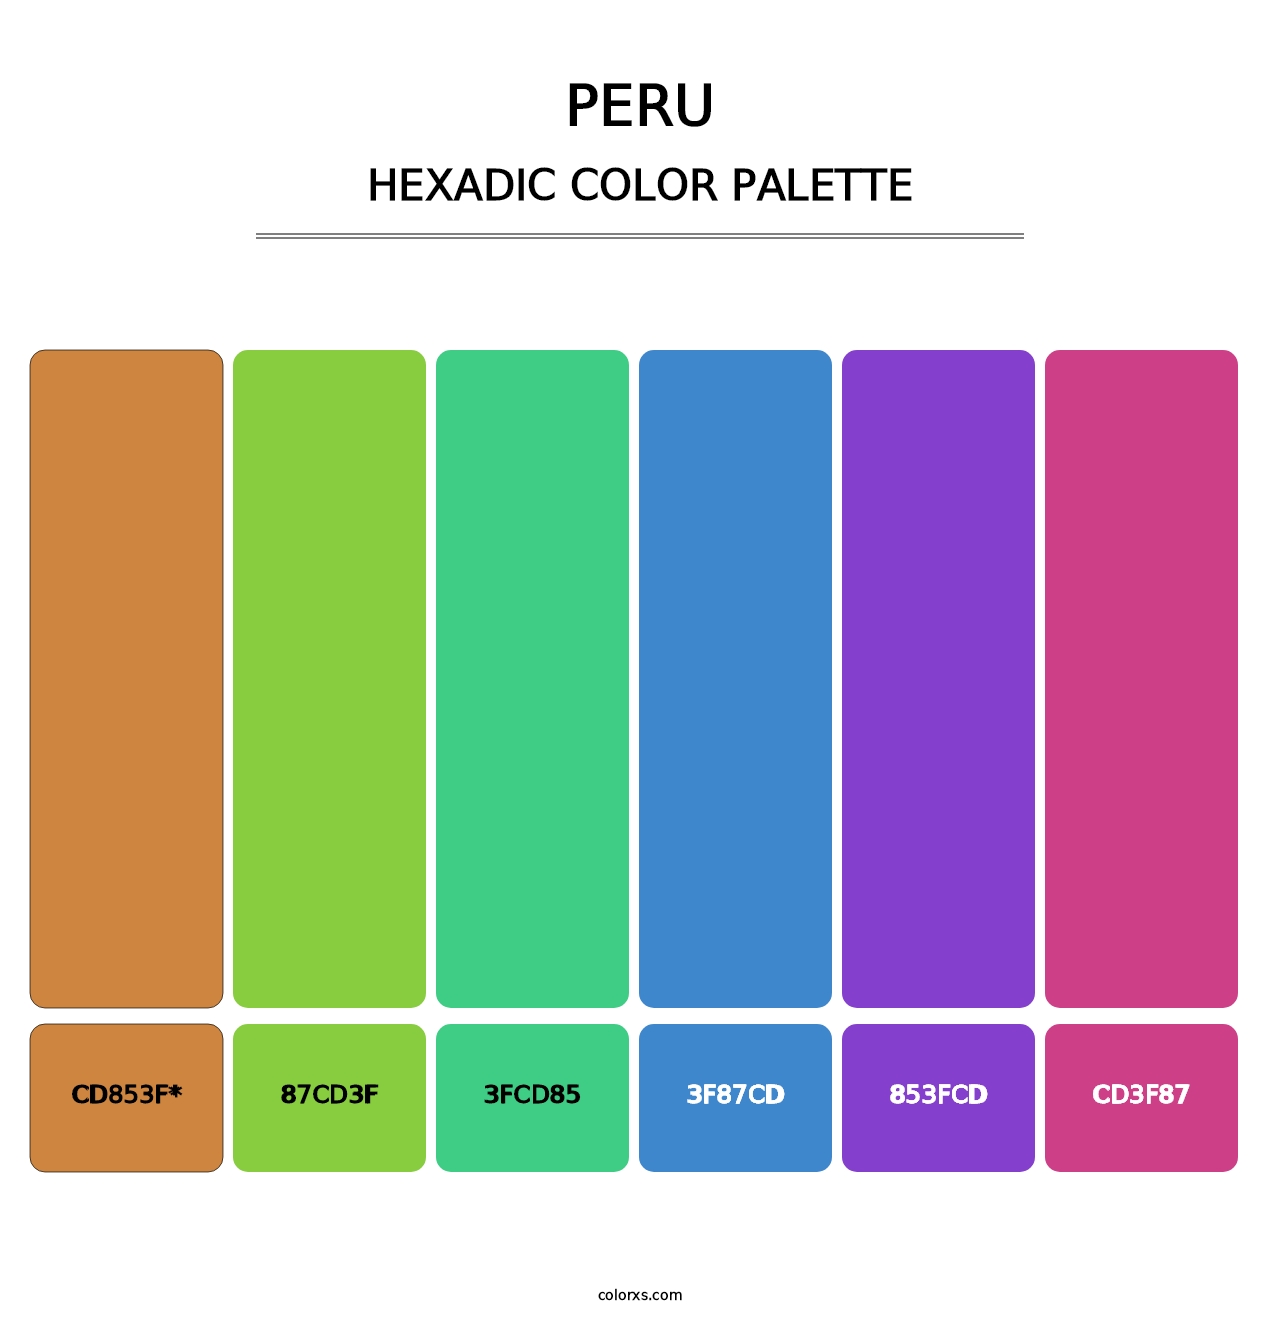 Peru - Hexadic Color Palette